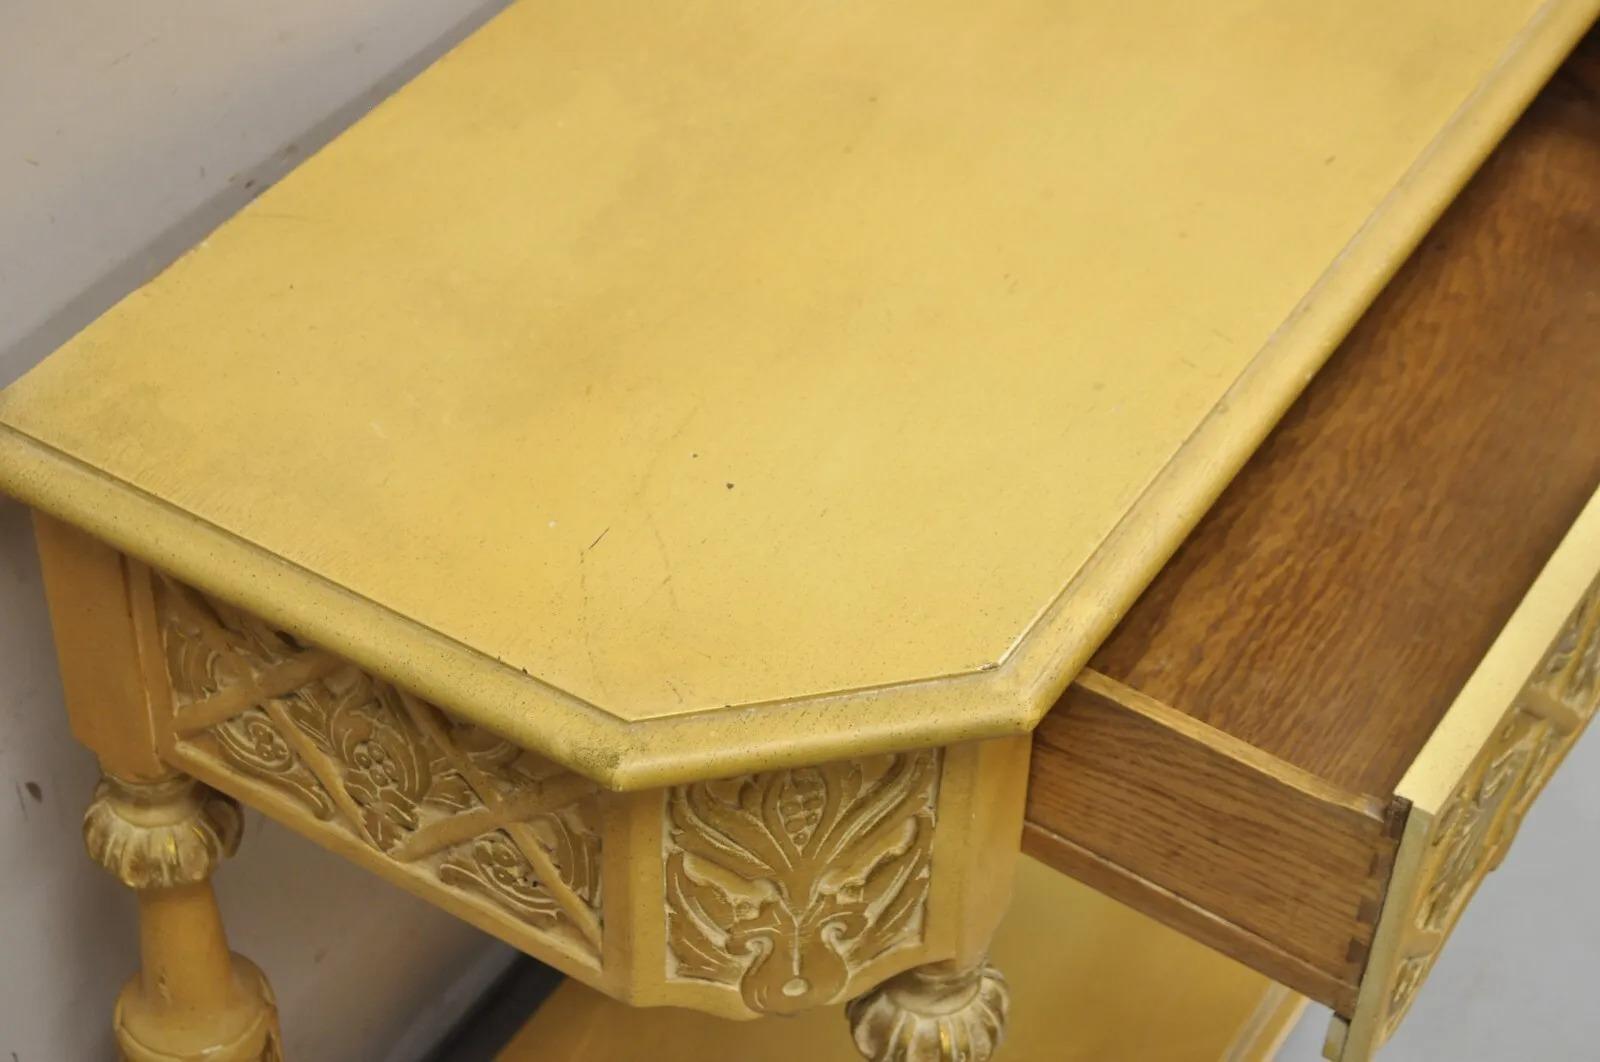 Gothic Renaissance Revival Painted Hall Altar Console Table Chair Set - 4 Pc Set For Sale 6